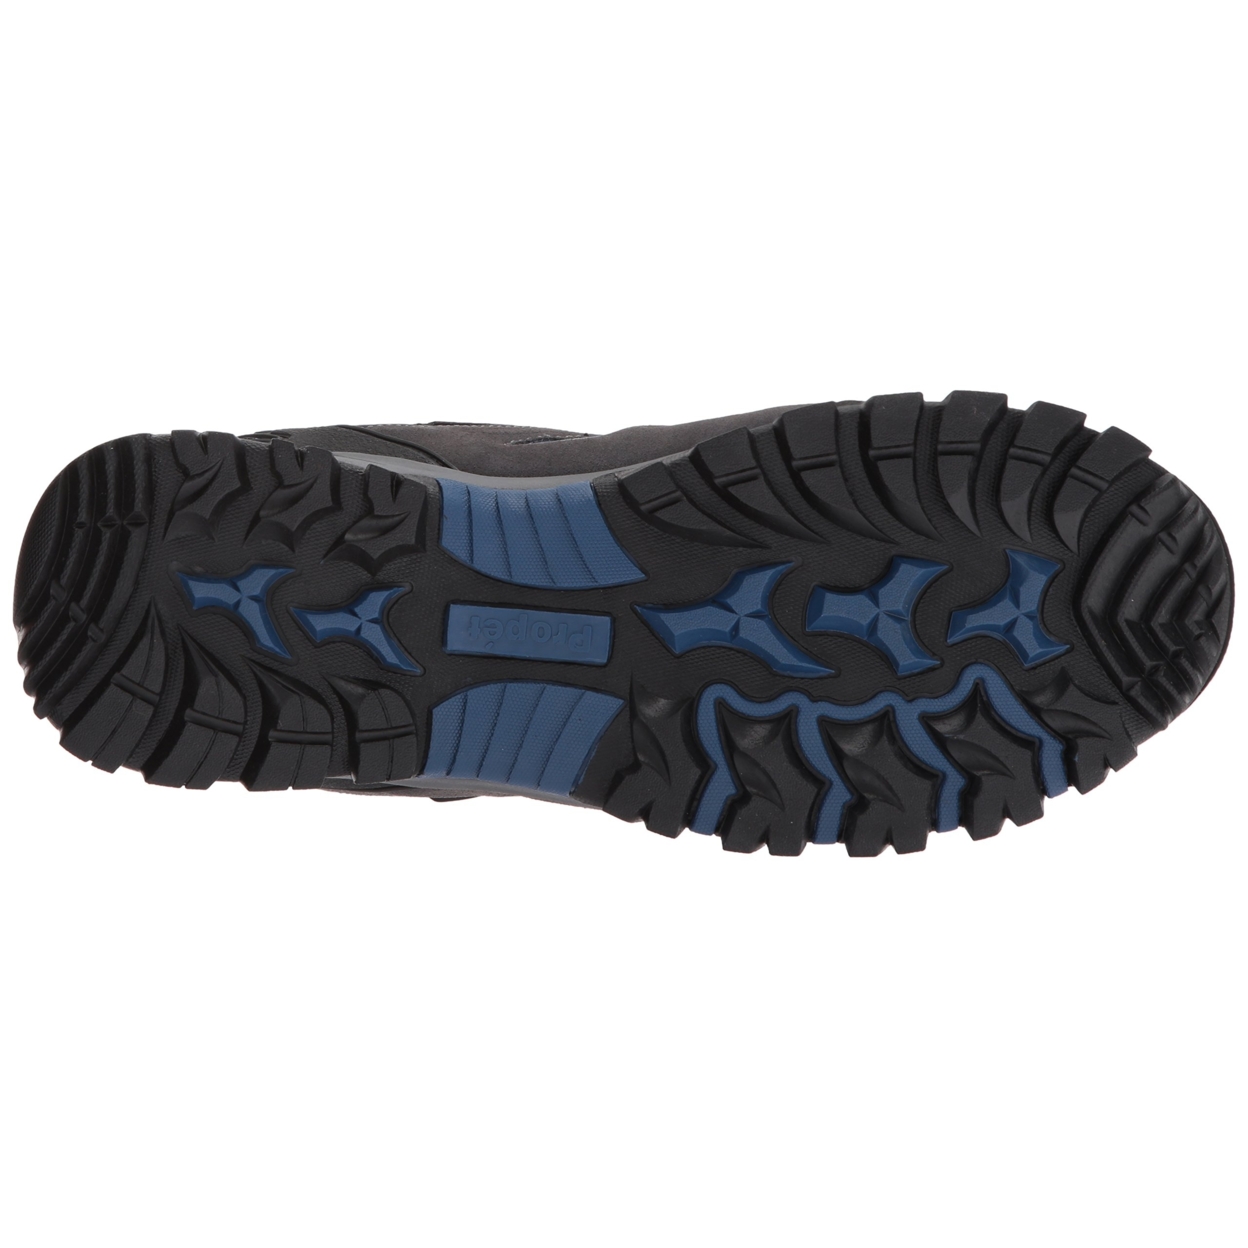 Propet Men's Ridge Walker Low Hiking Shoe Grey/Blue - M3598GRB GREY/BLUE - GREY/BLUE, 9.5-E